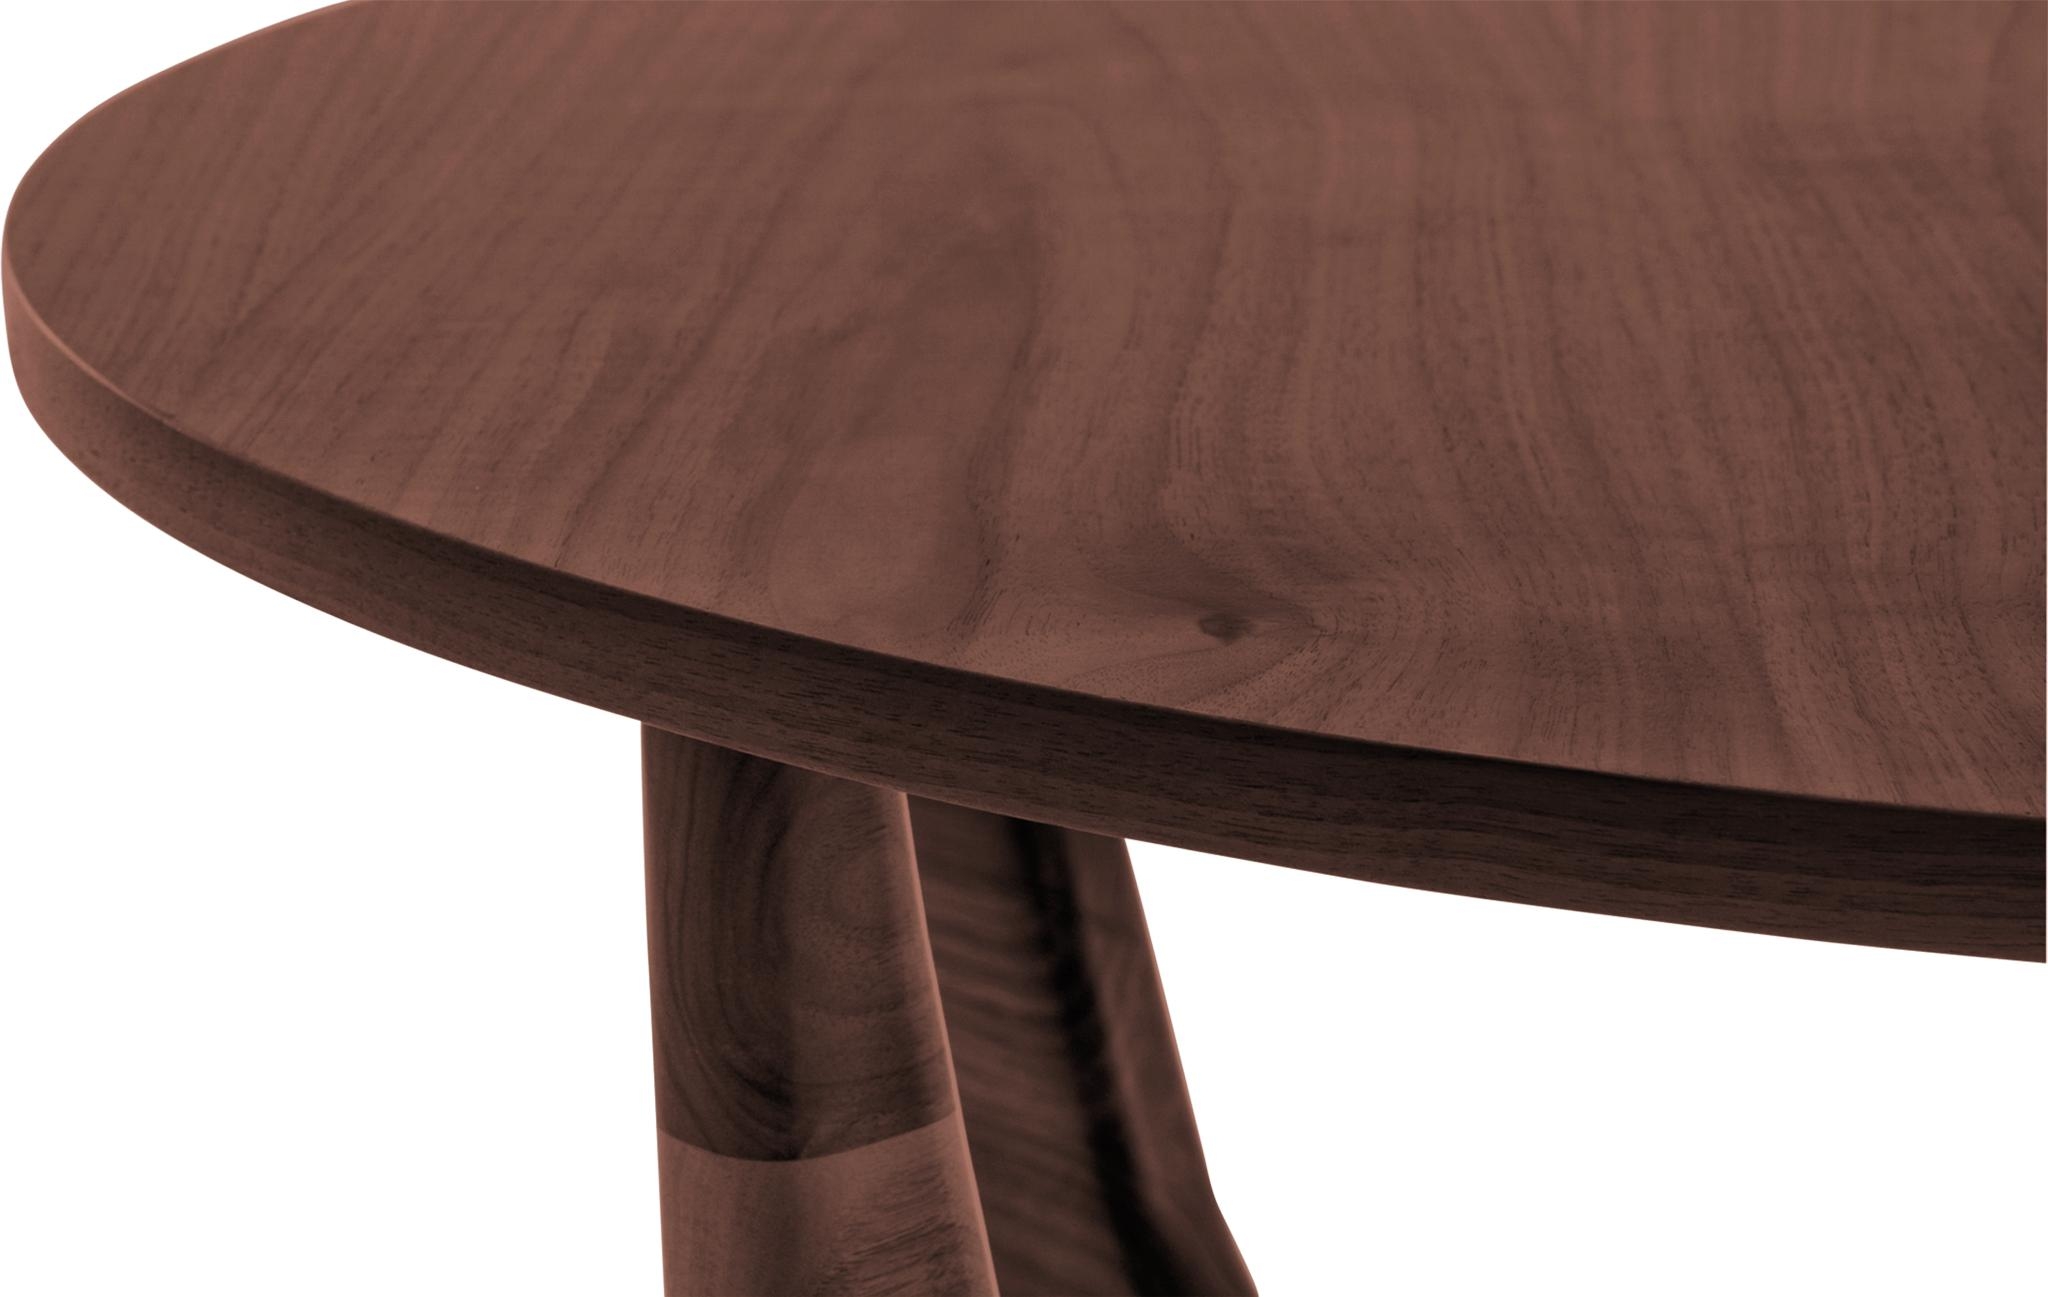 Stern Mid Century Modern (Wood Top) End Table - Walnut - Image 4